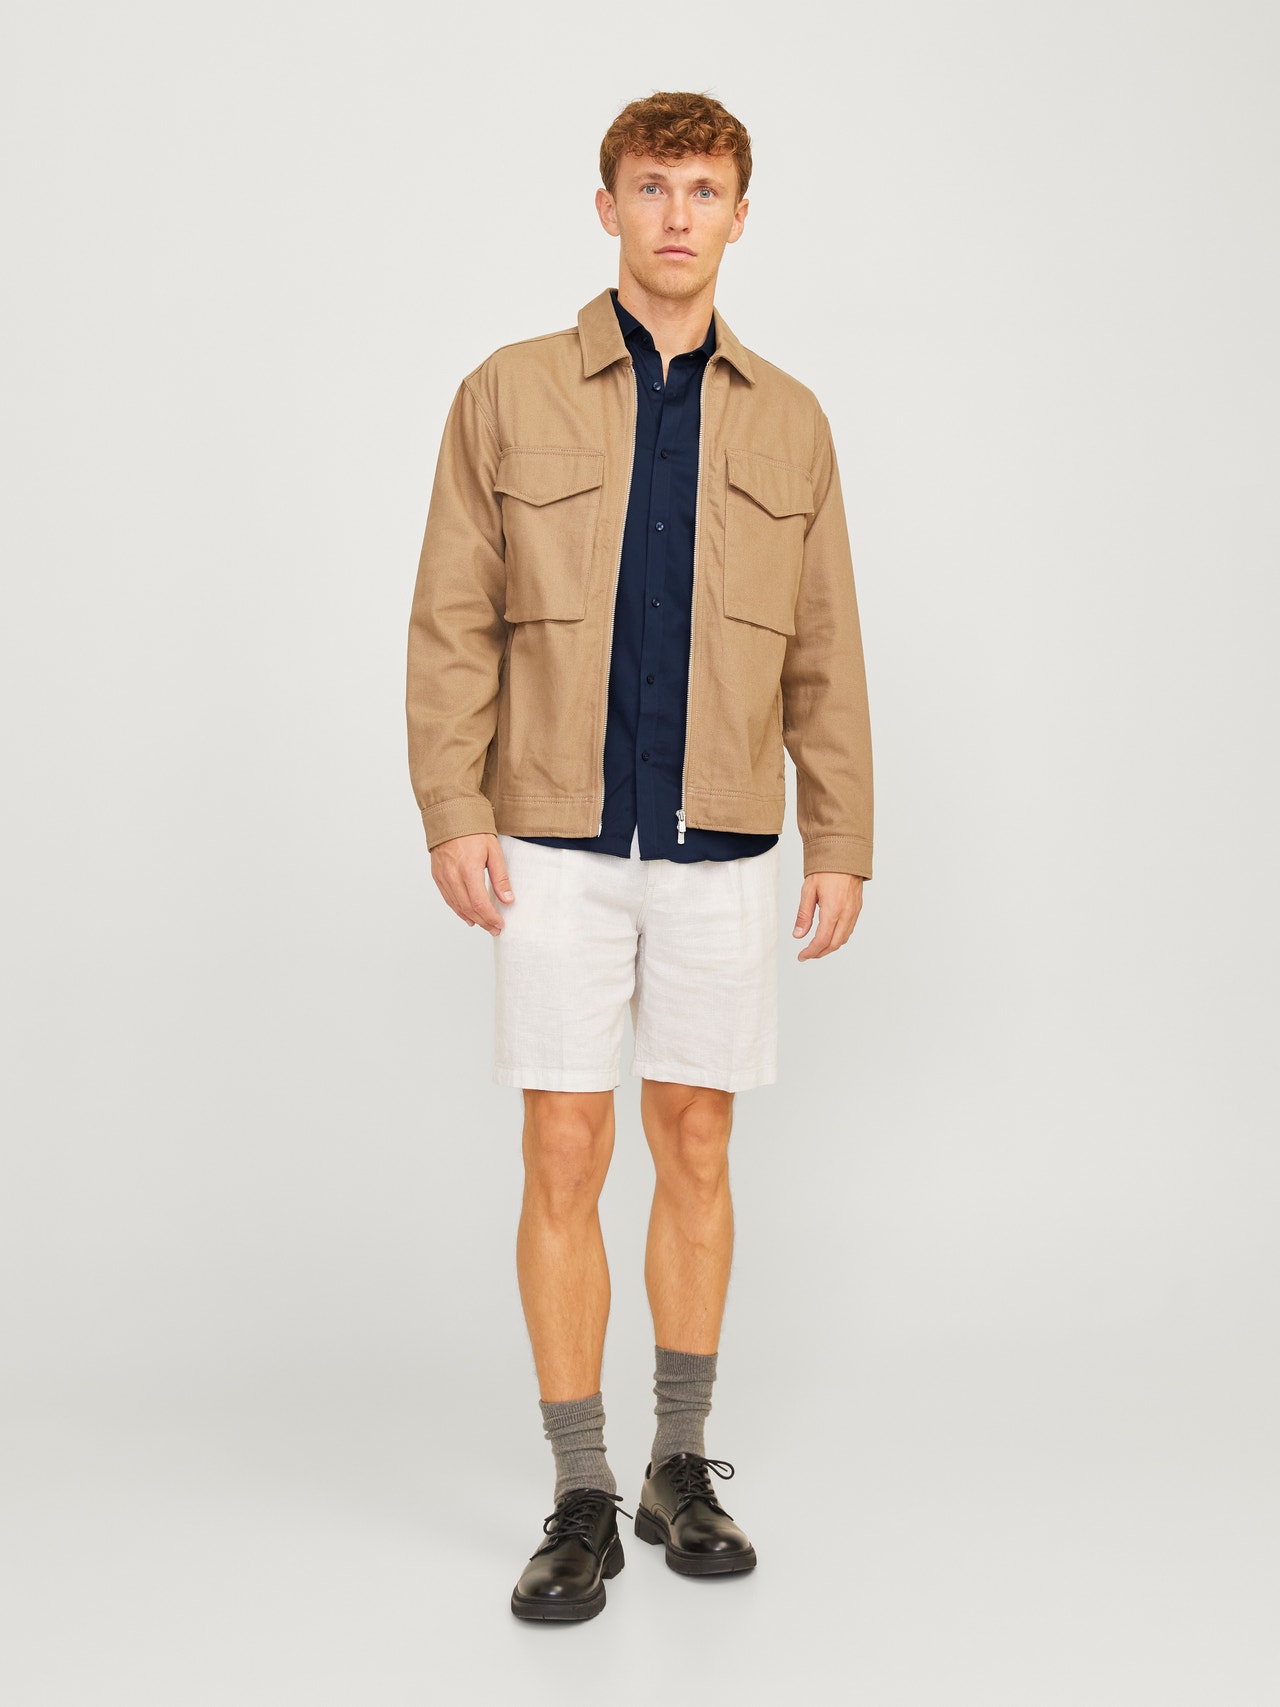 Jack & Jones Super Slim Fit Shirt -Navy Blazer - 12097662